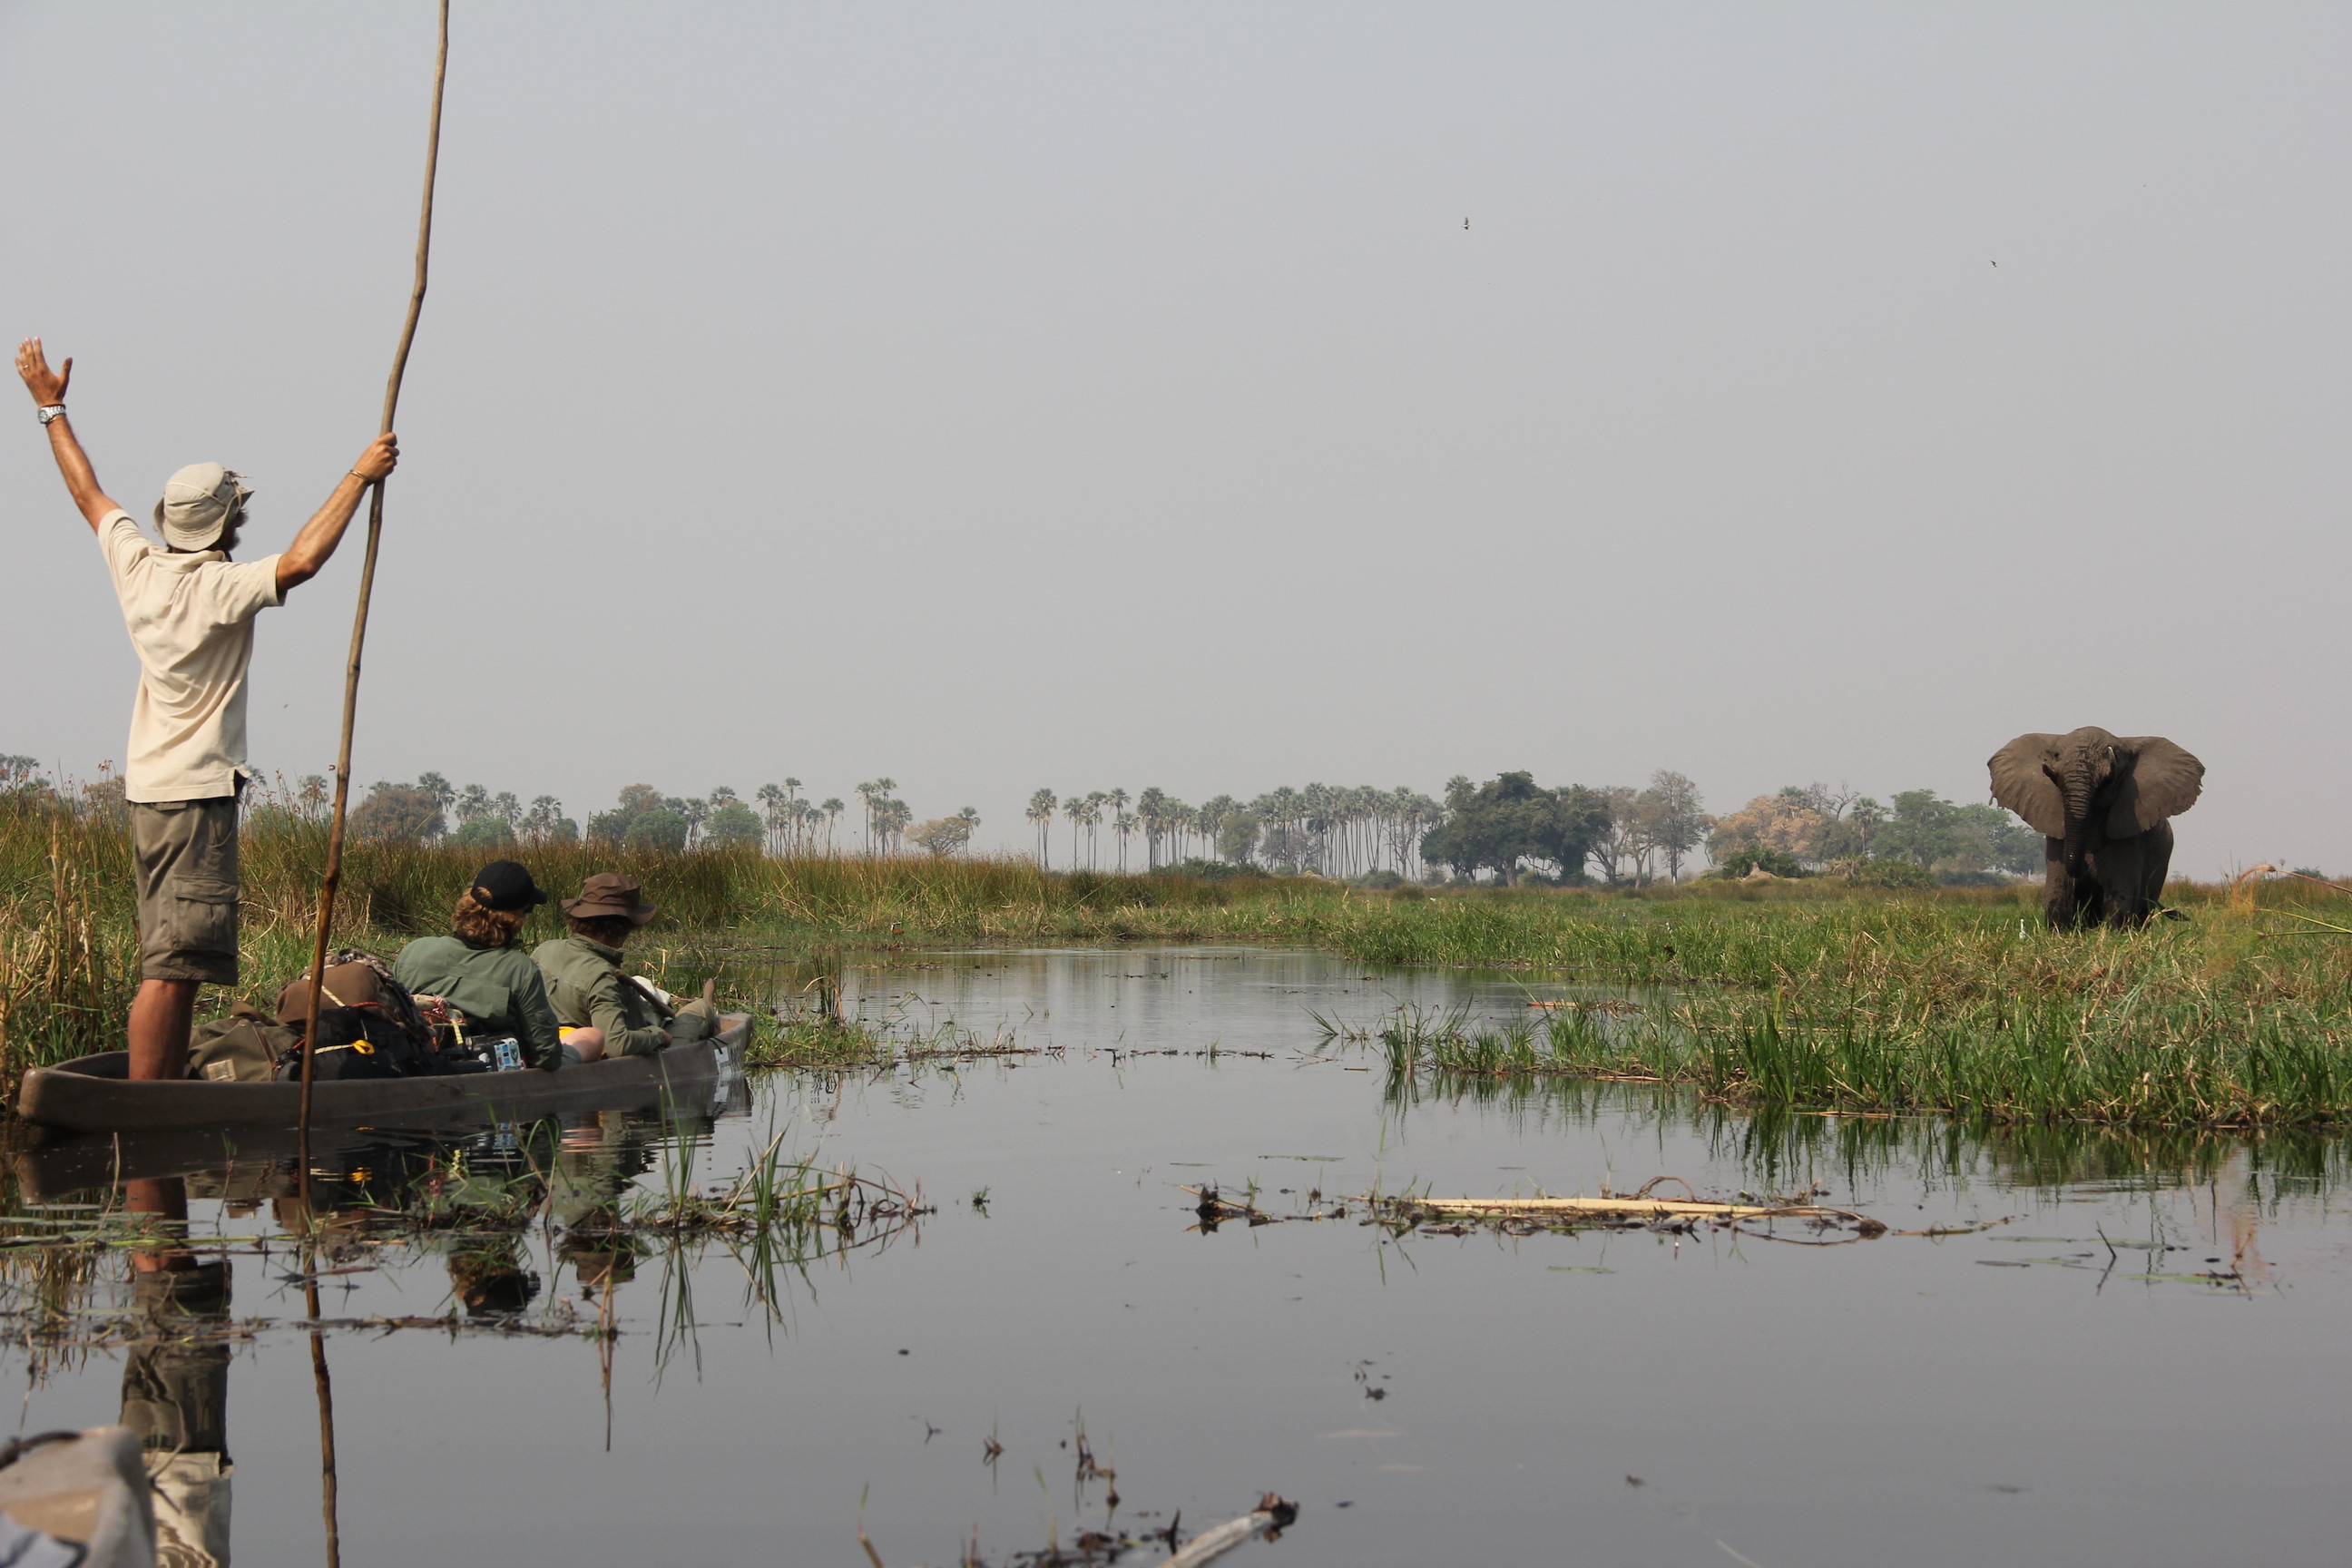 Boyes greeting an elephant while crossing the Okavango Delta. Image courtesy Steve Boyes.